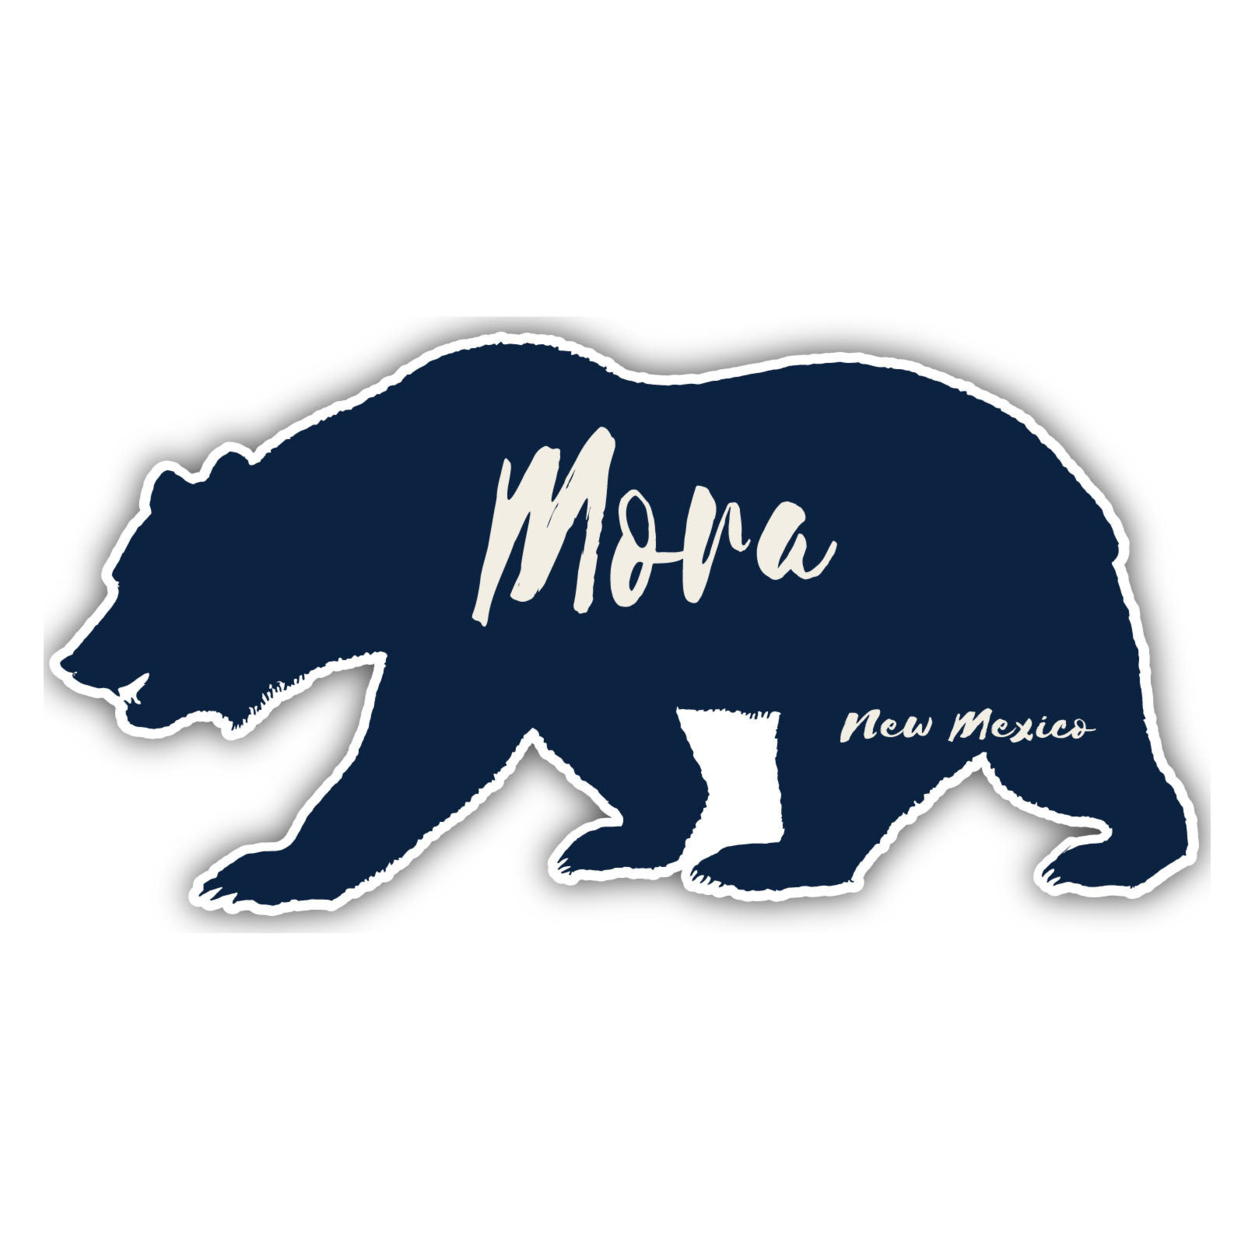 Mora New Mexico Souvenir Decorative Stickers (Choose Theme And Size) - Single Unit, 4-Inch, Bear